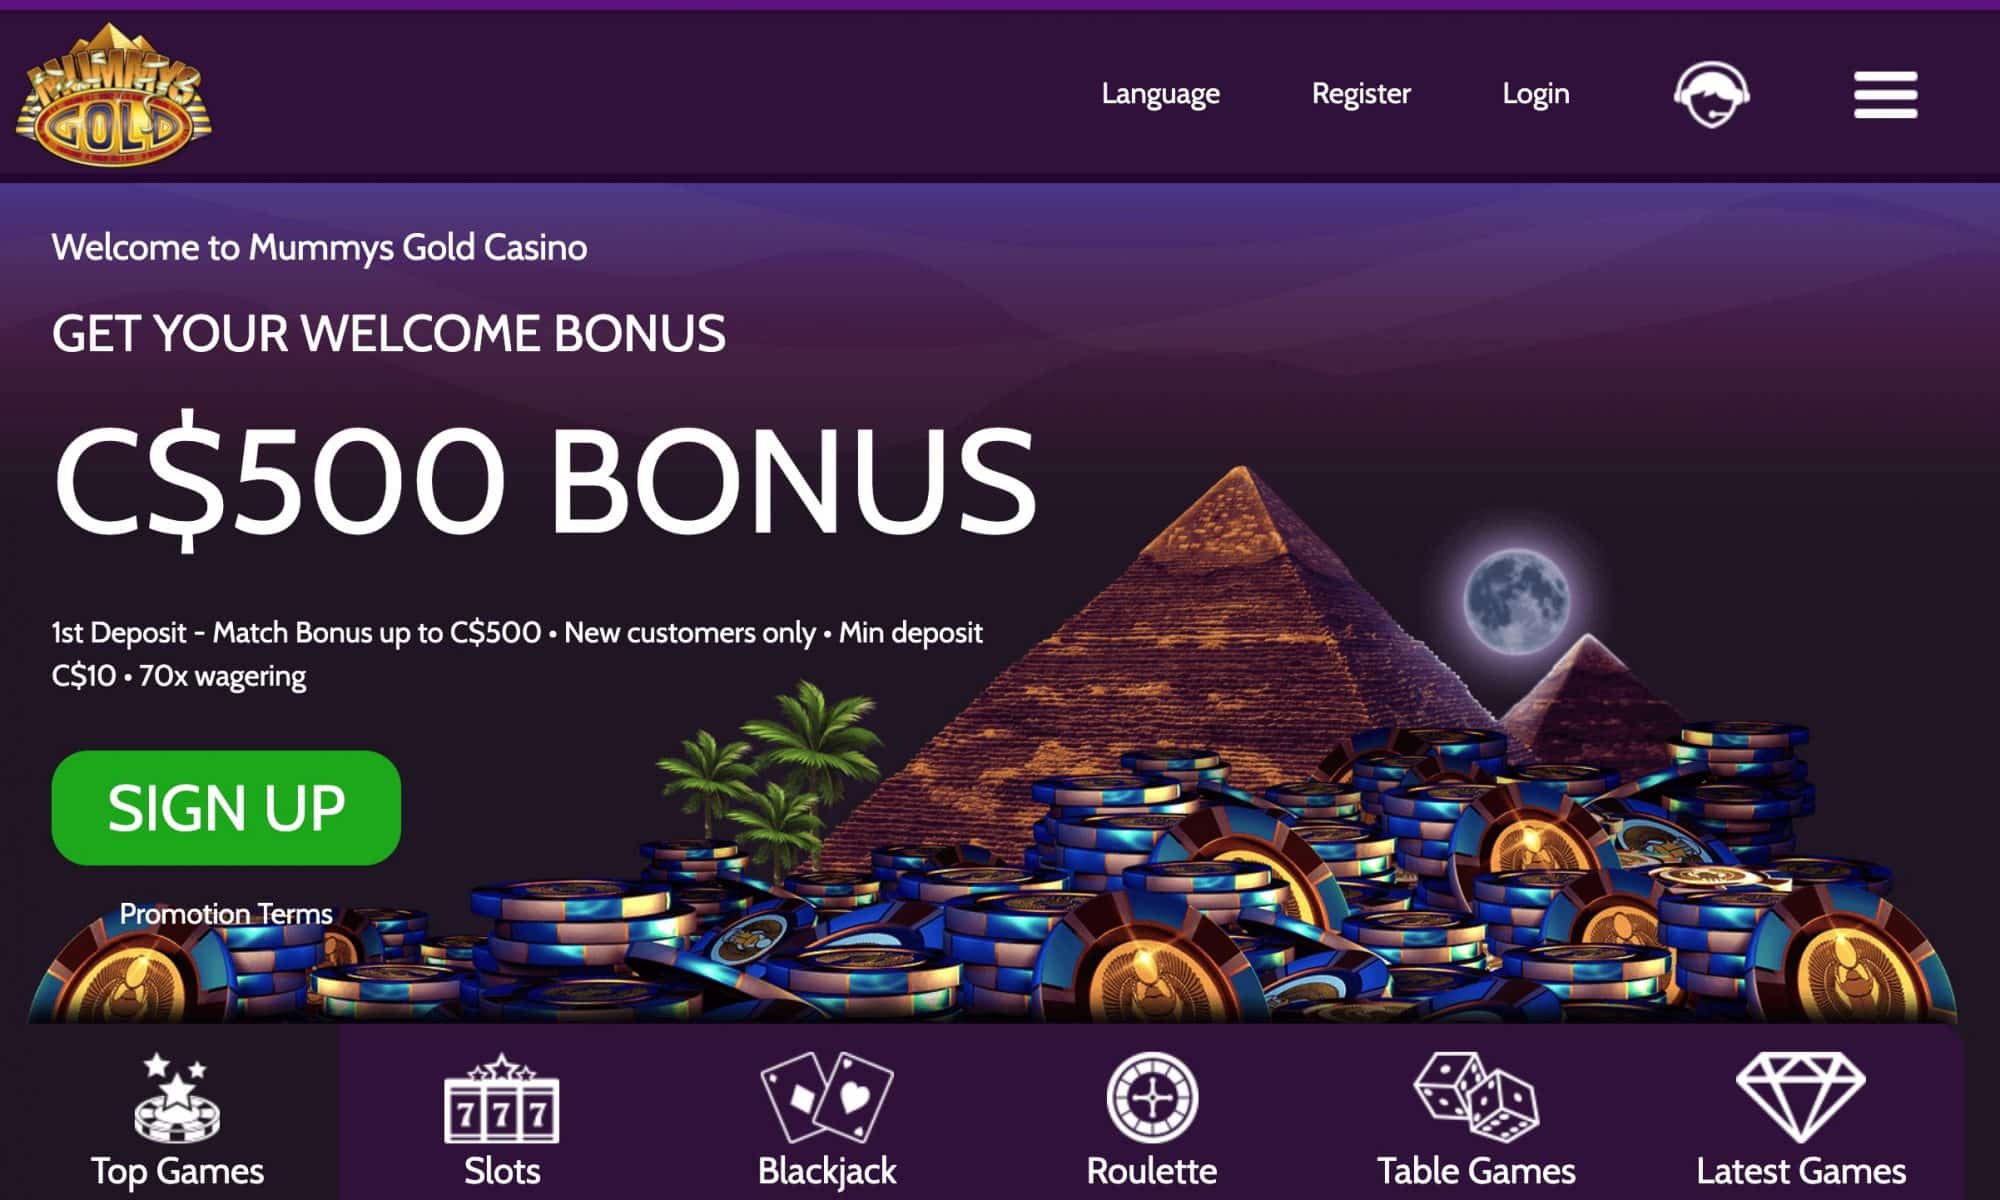 Mummys Gold Casino - 100% deposit bonus up to $500 bonus